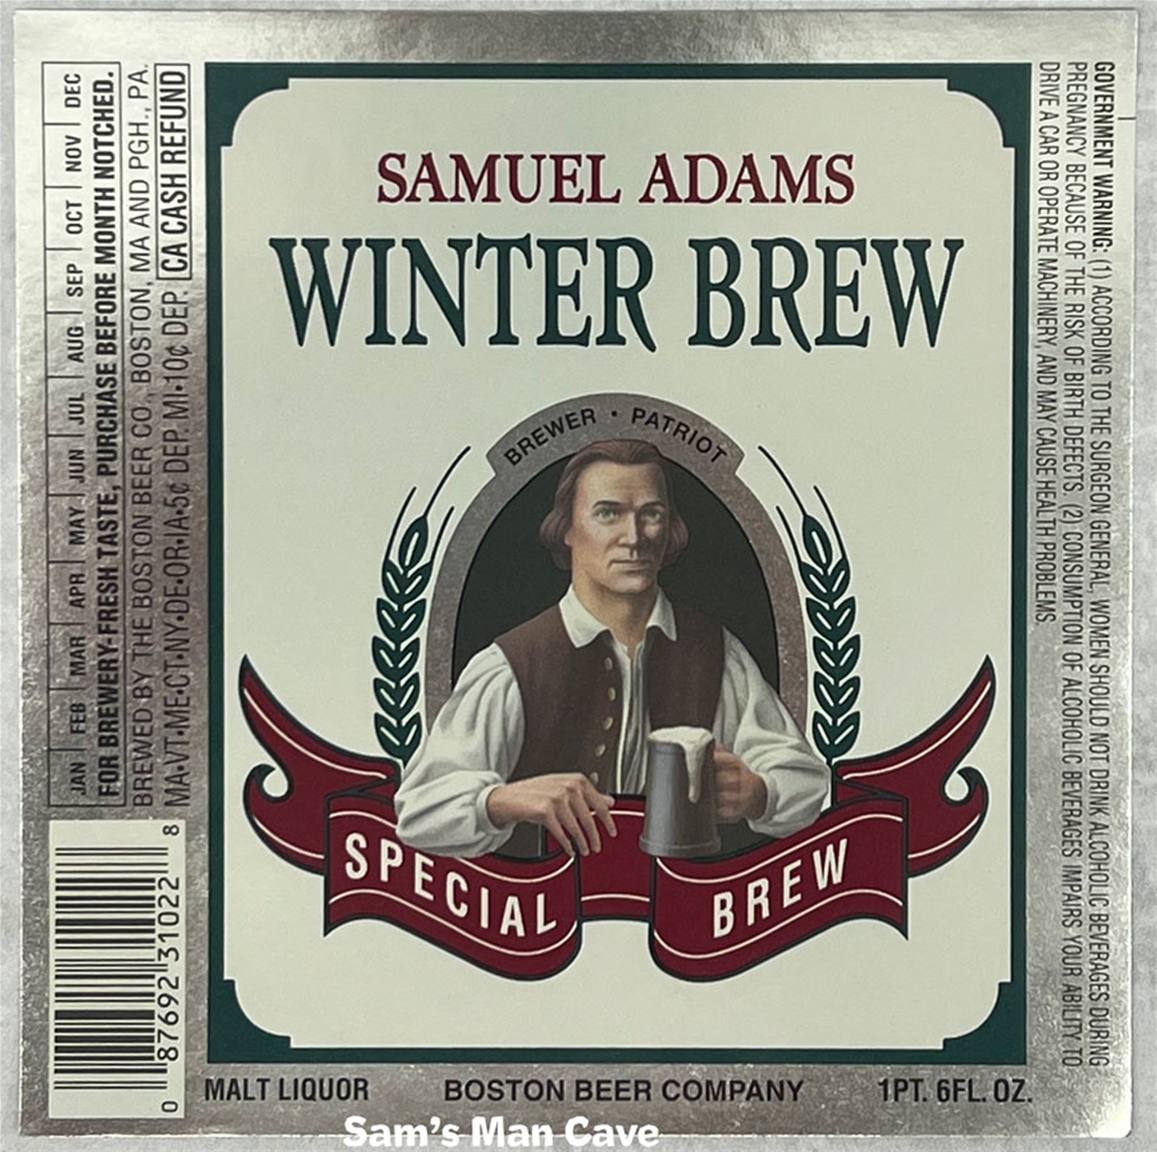 Samuel Adams Winter Brew Label